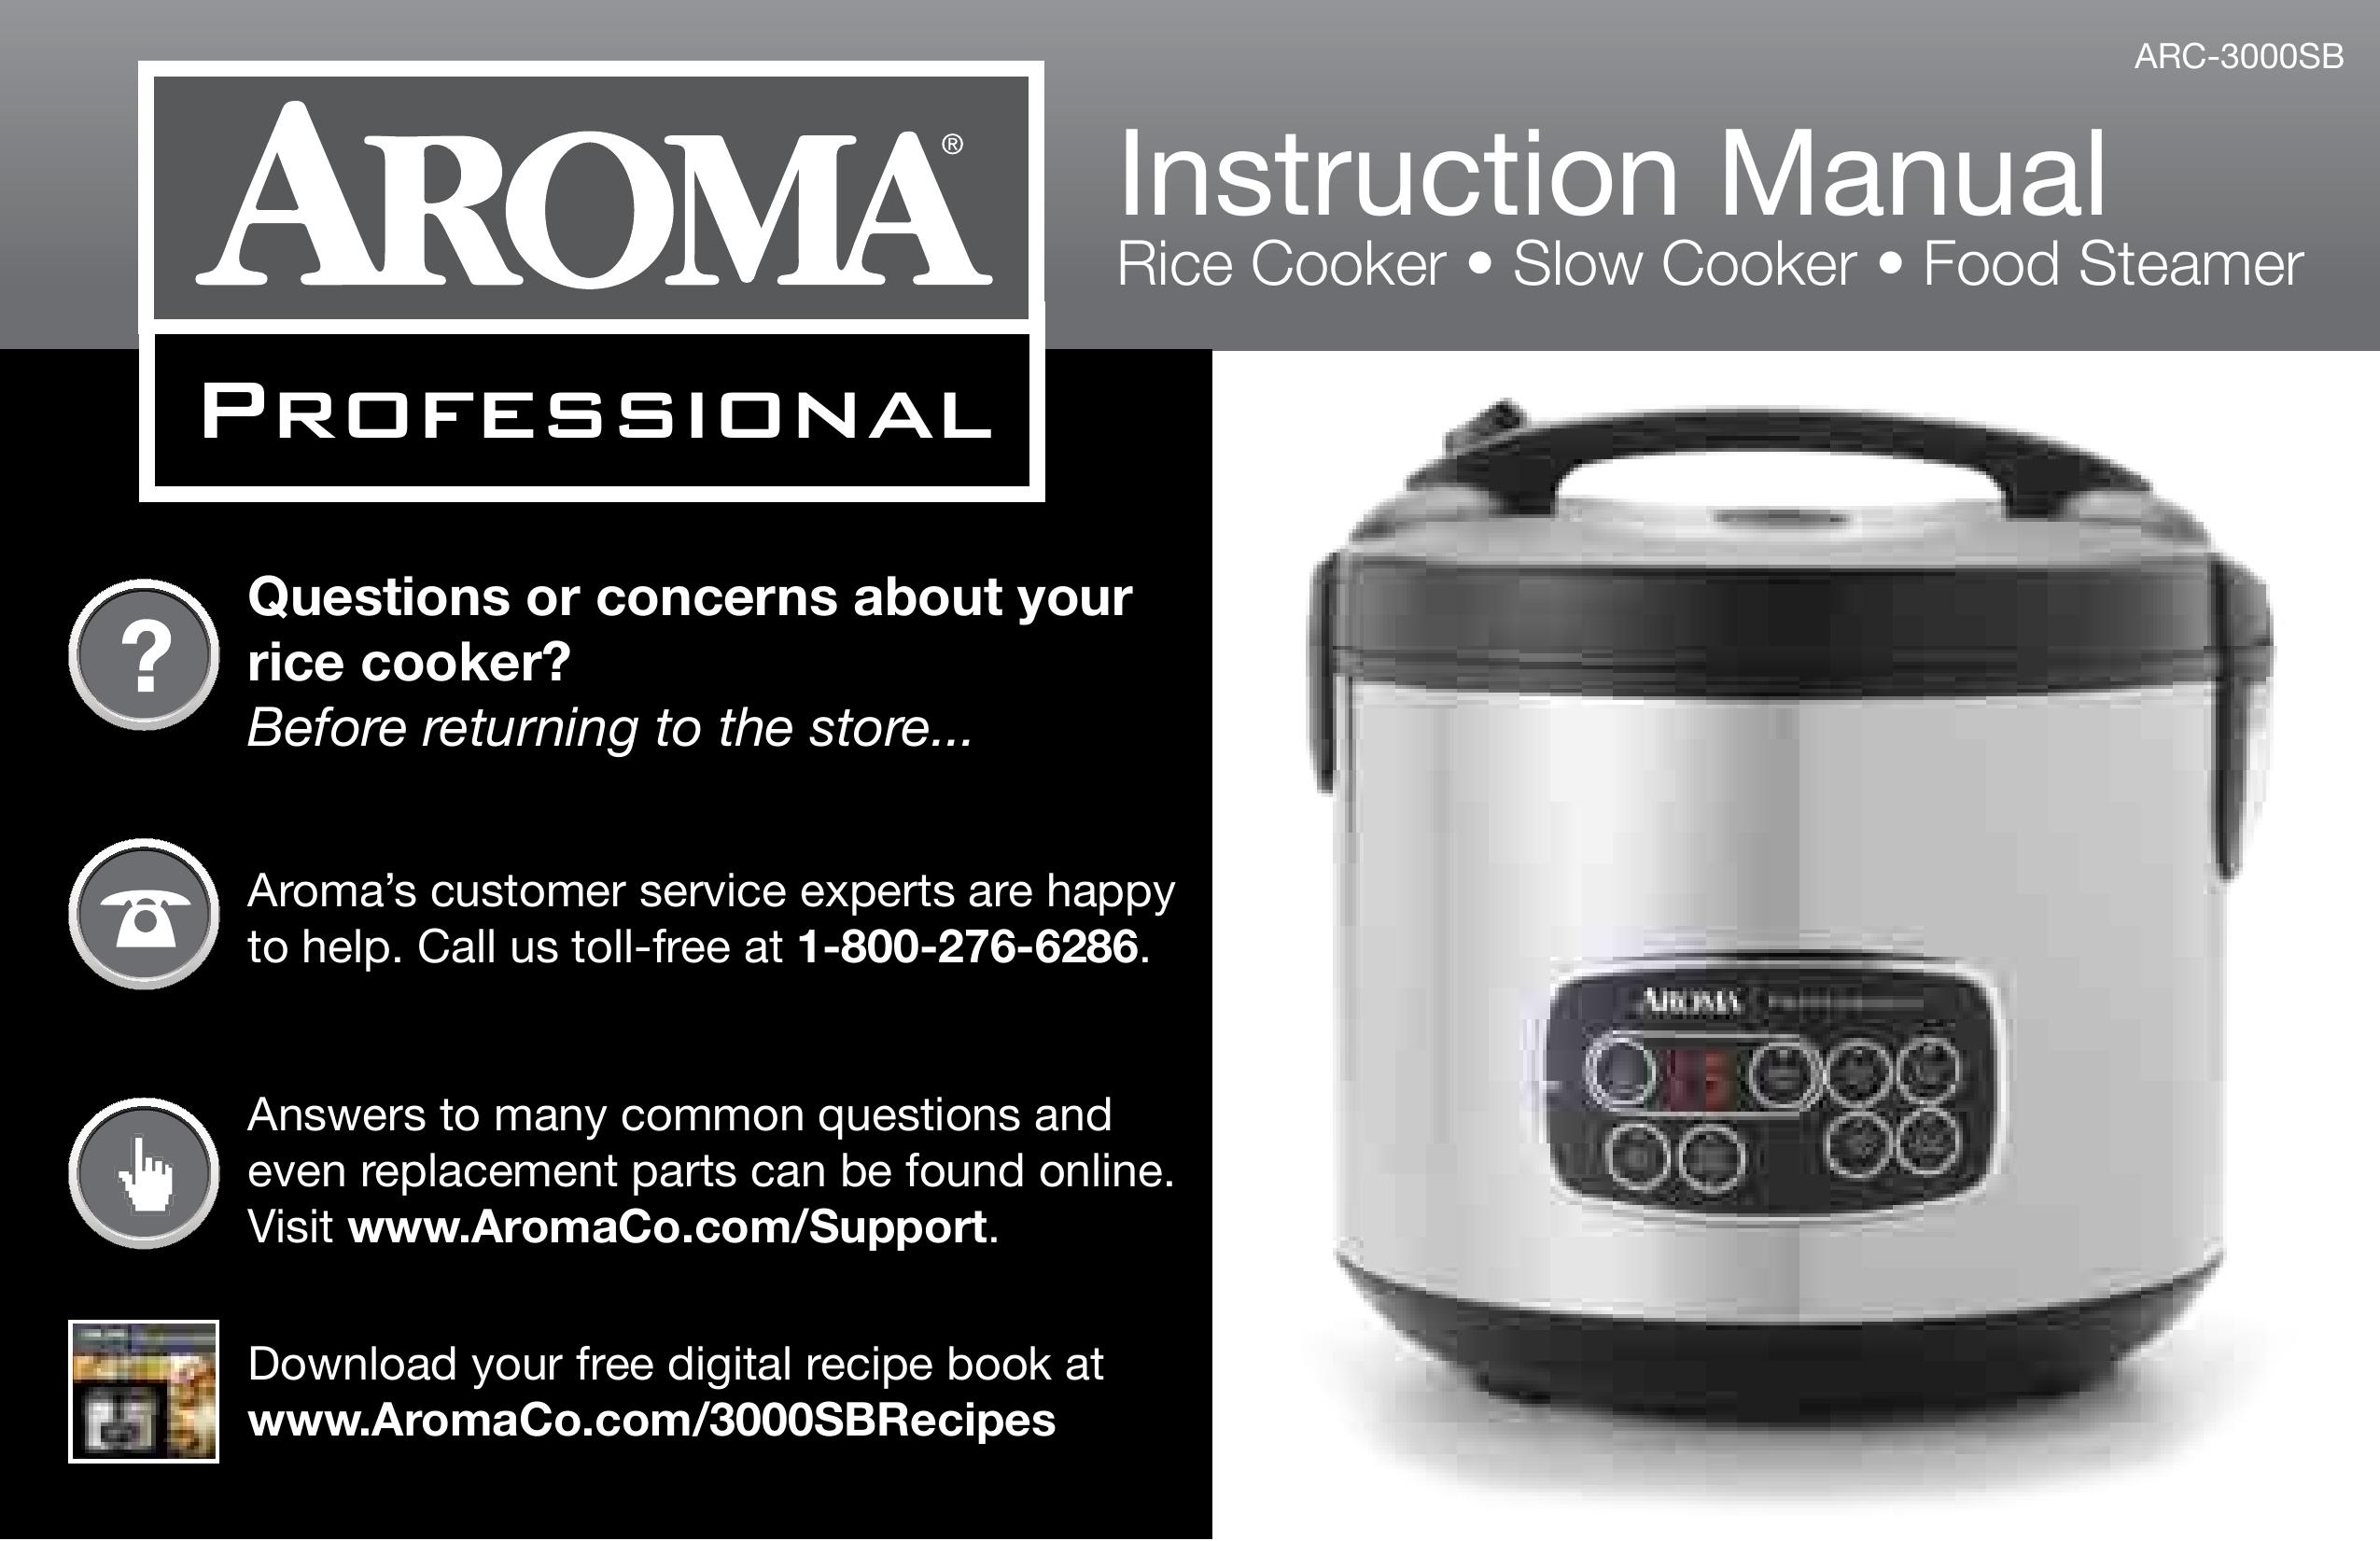 Aroma ARC-3000SB Rice Cooker User Manual